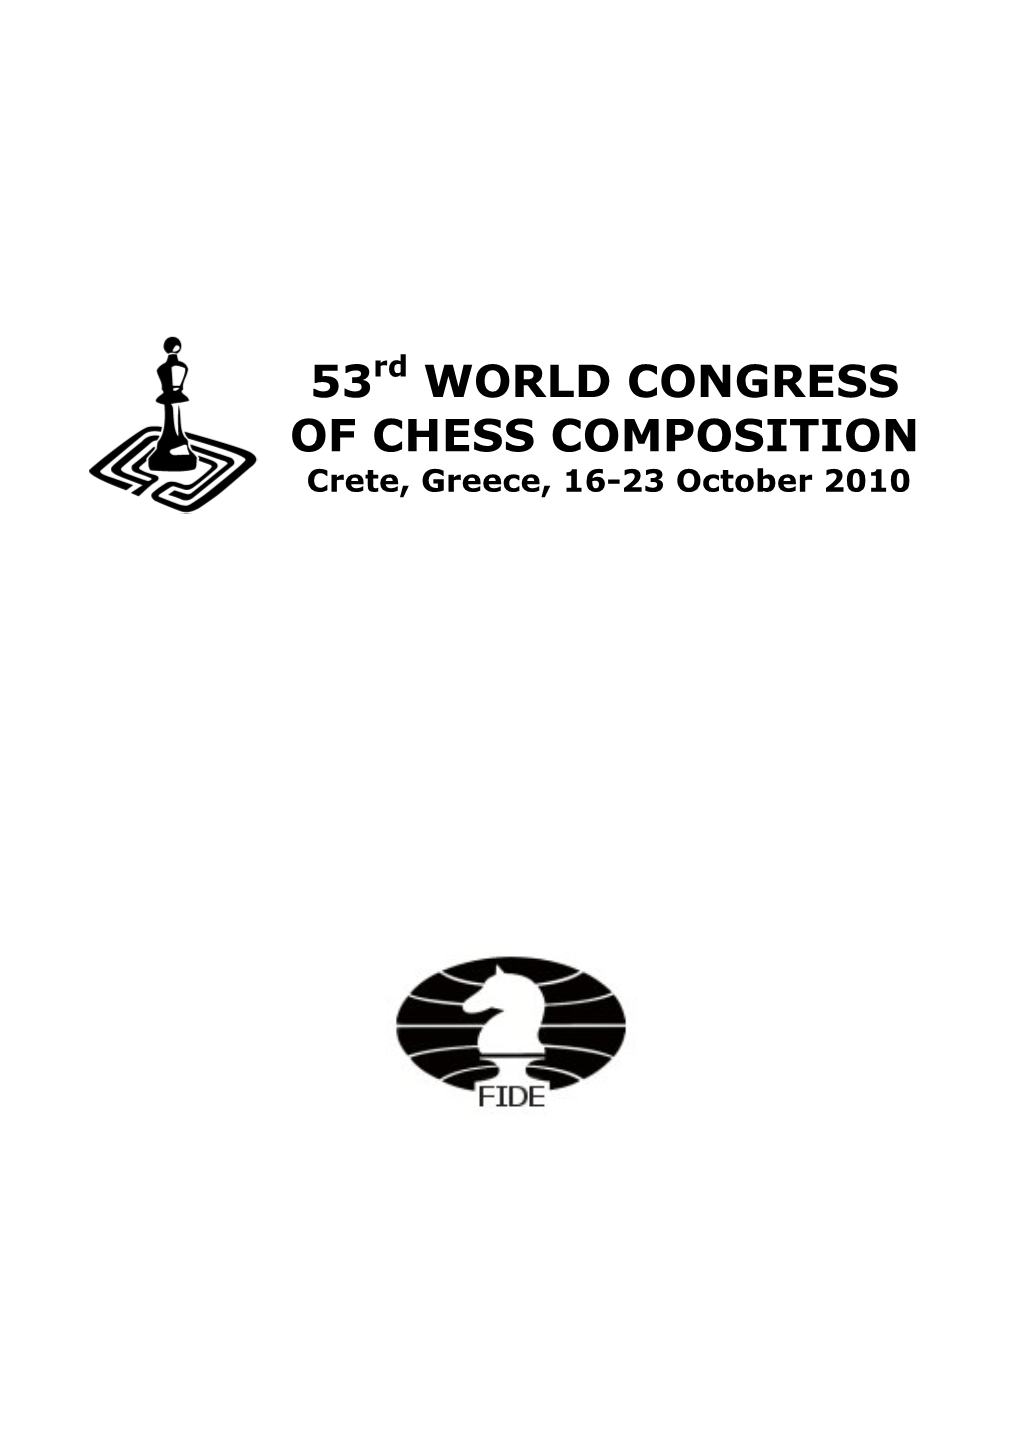 53Rd WORLD CONGRESS of CHESS COMPOSITION Crete, Greece, 16-23 October 2010